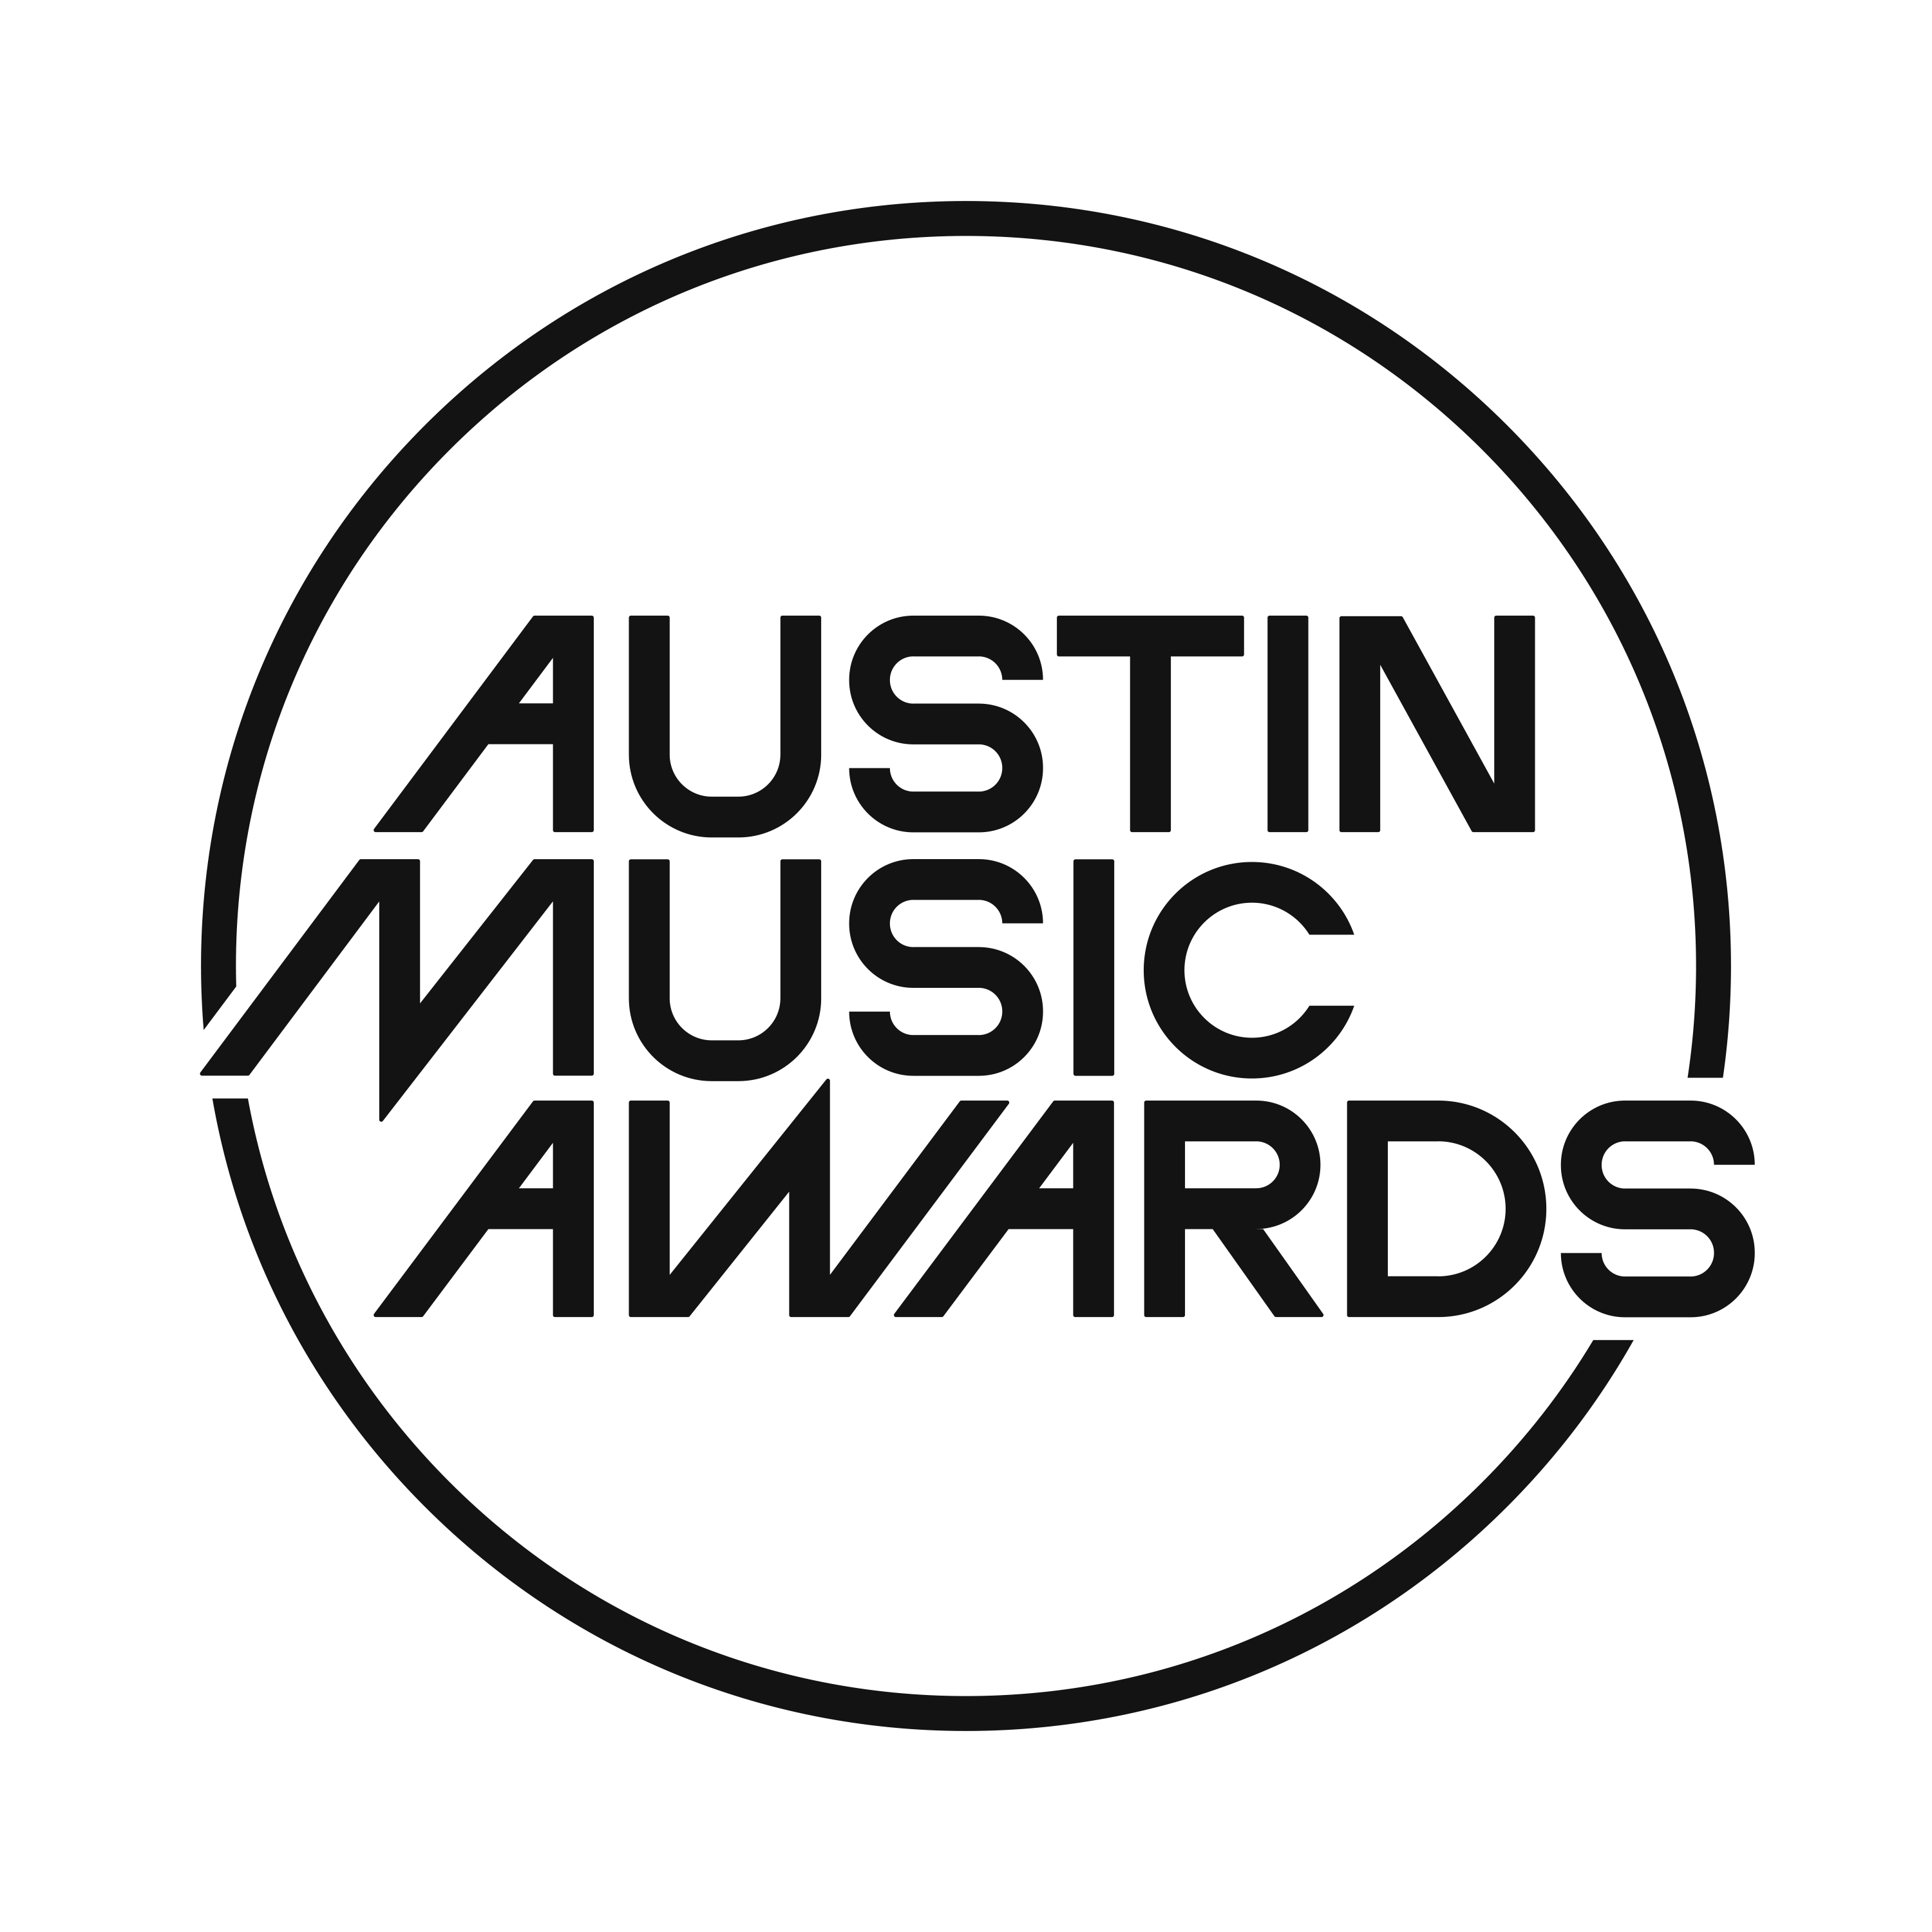 Austin Music Awards